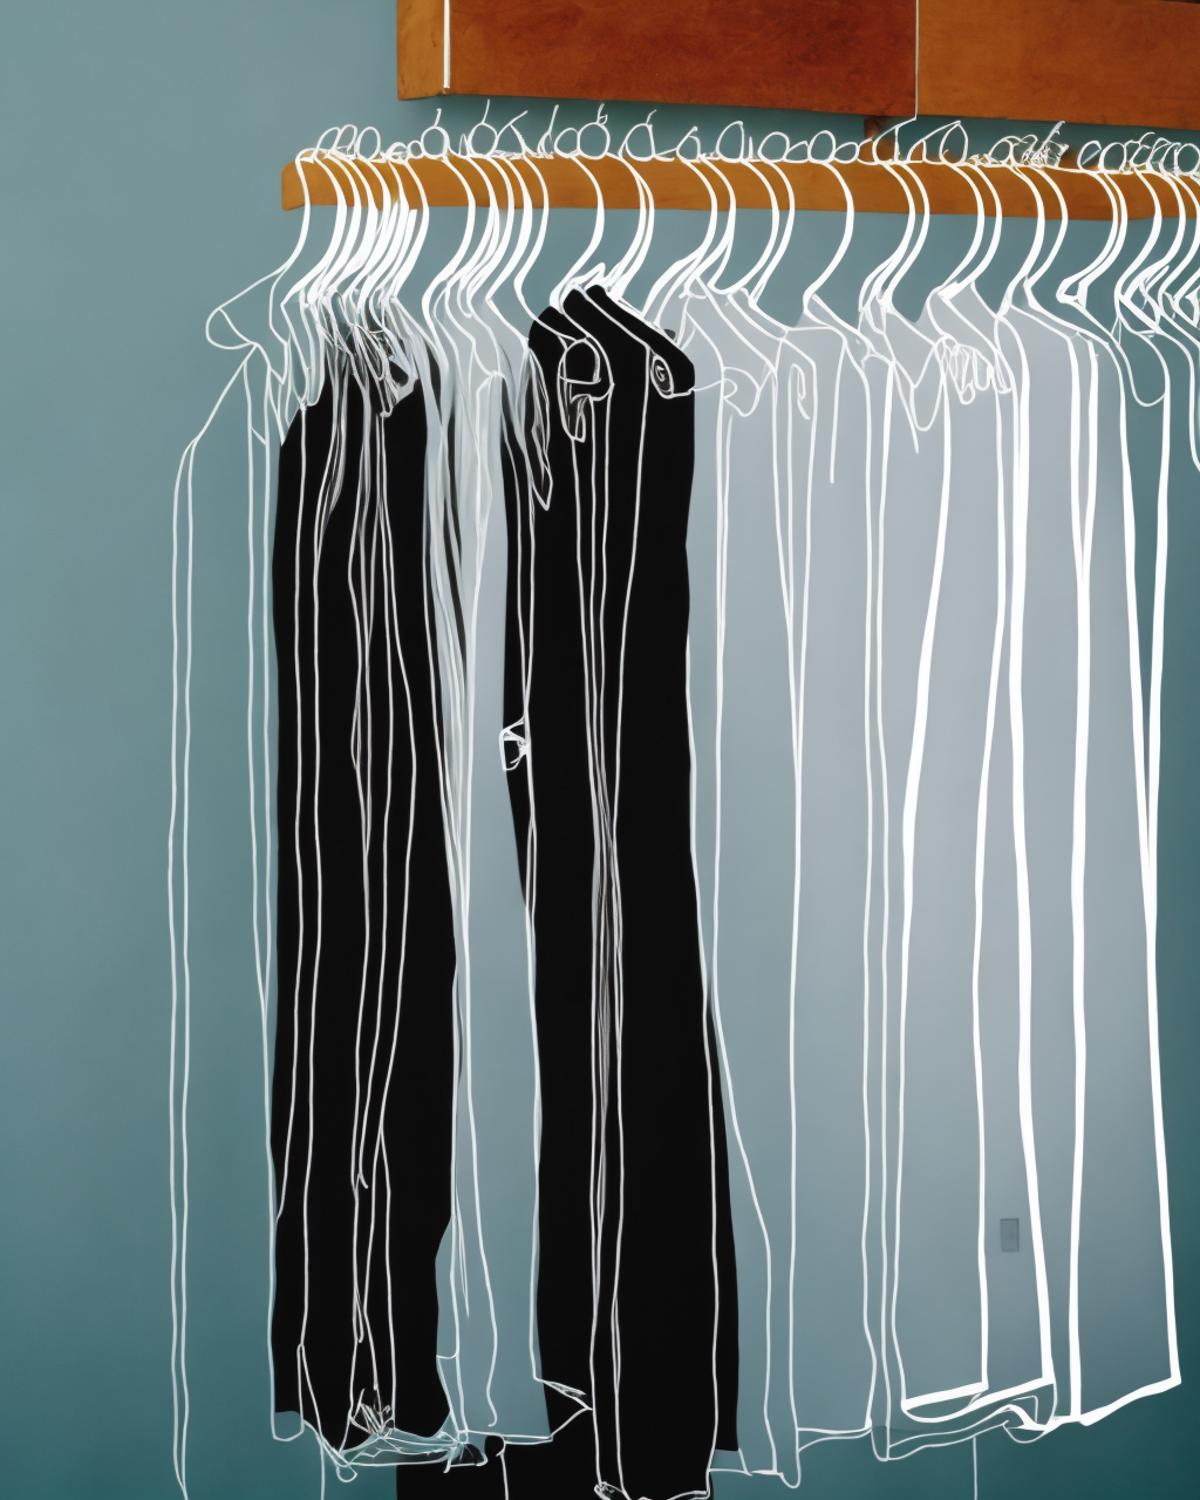 Lines clothes image by Lara_De_Martin